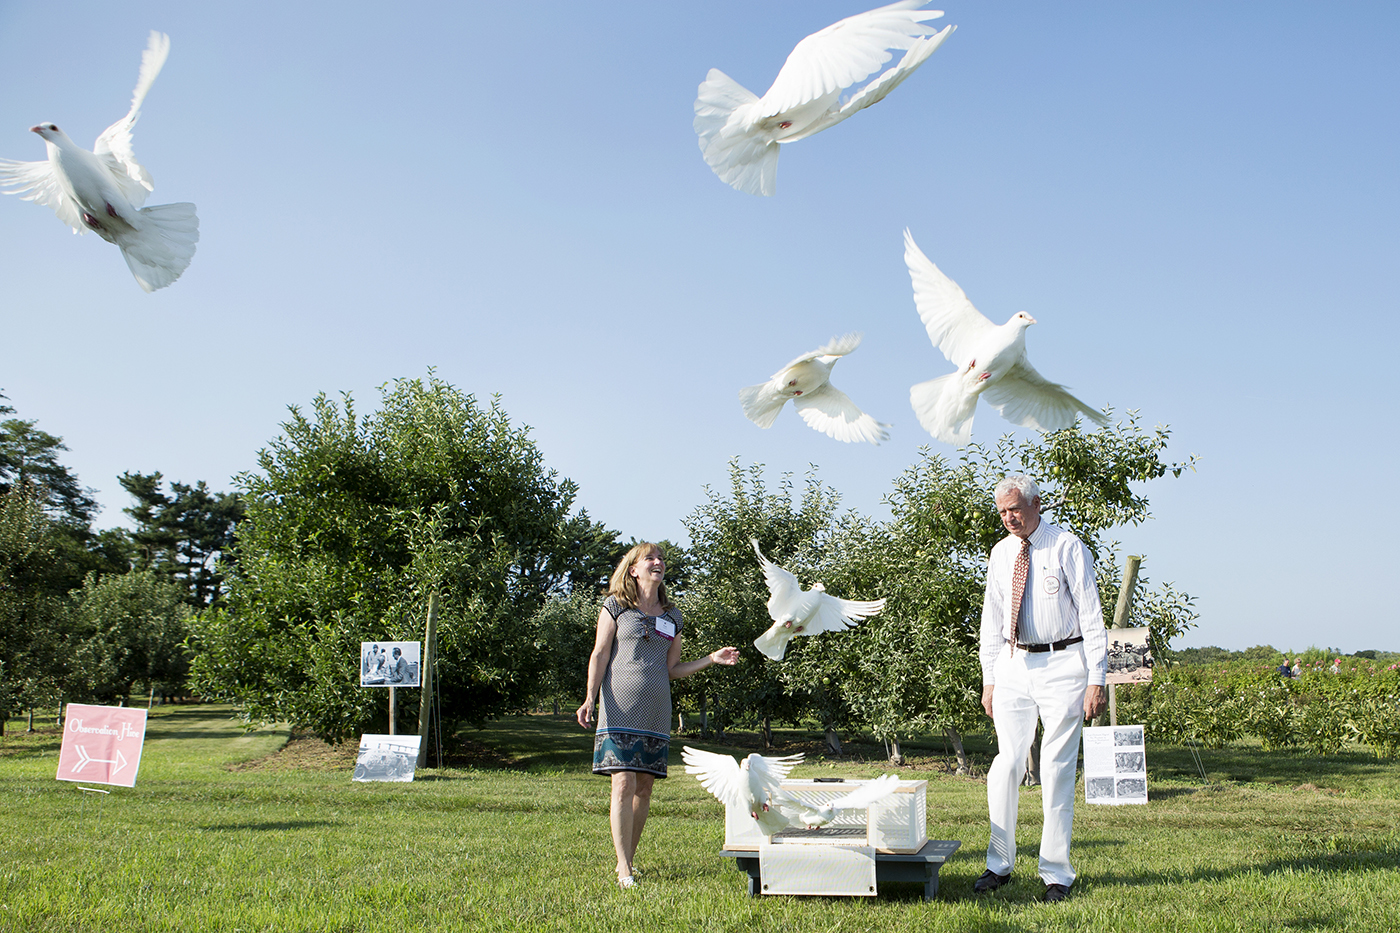 Pam Greene and Jack Wickham releasing doves